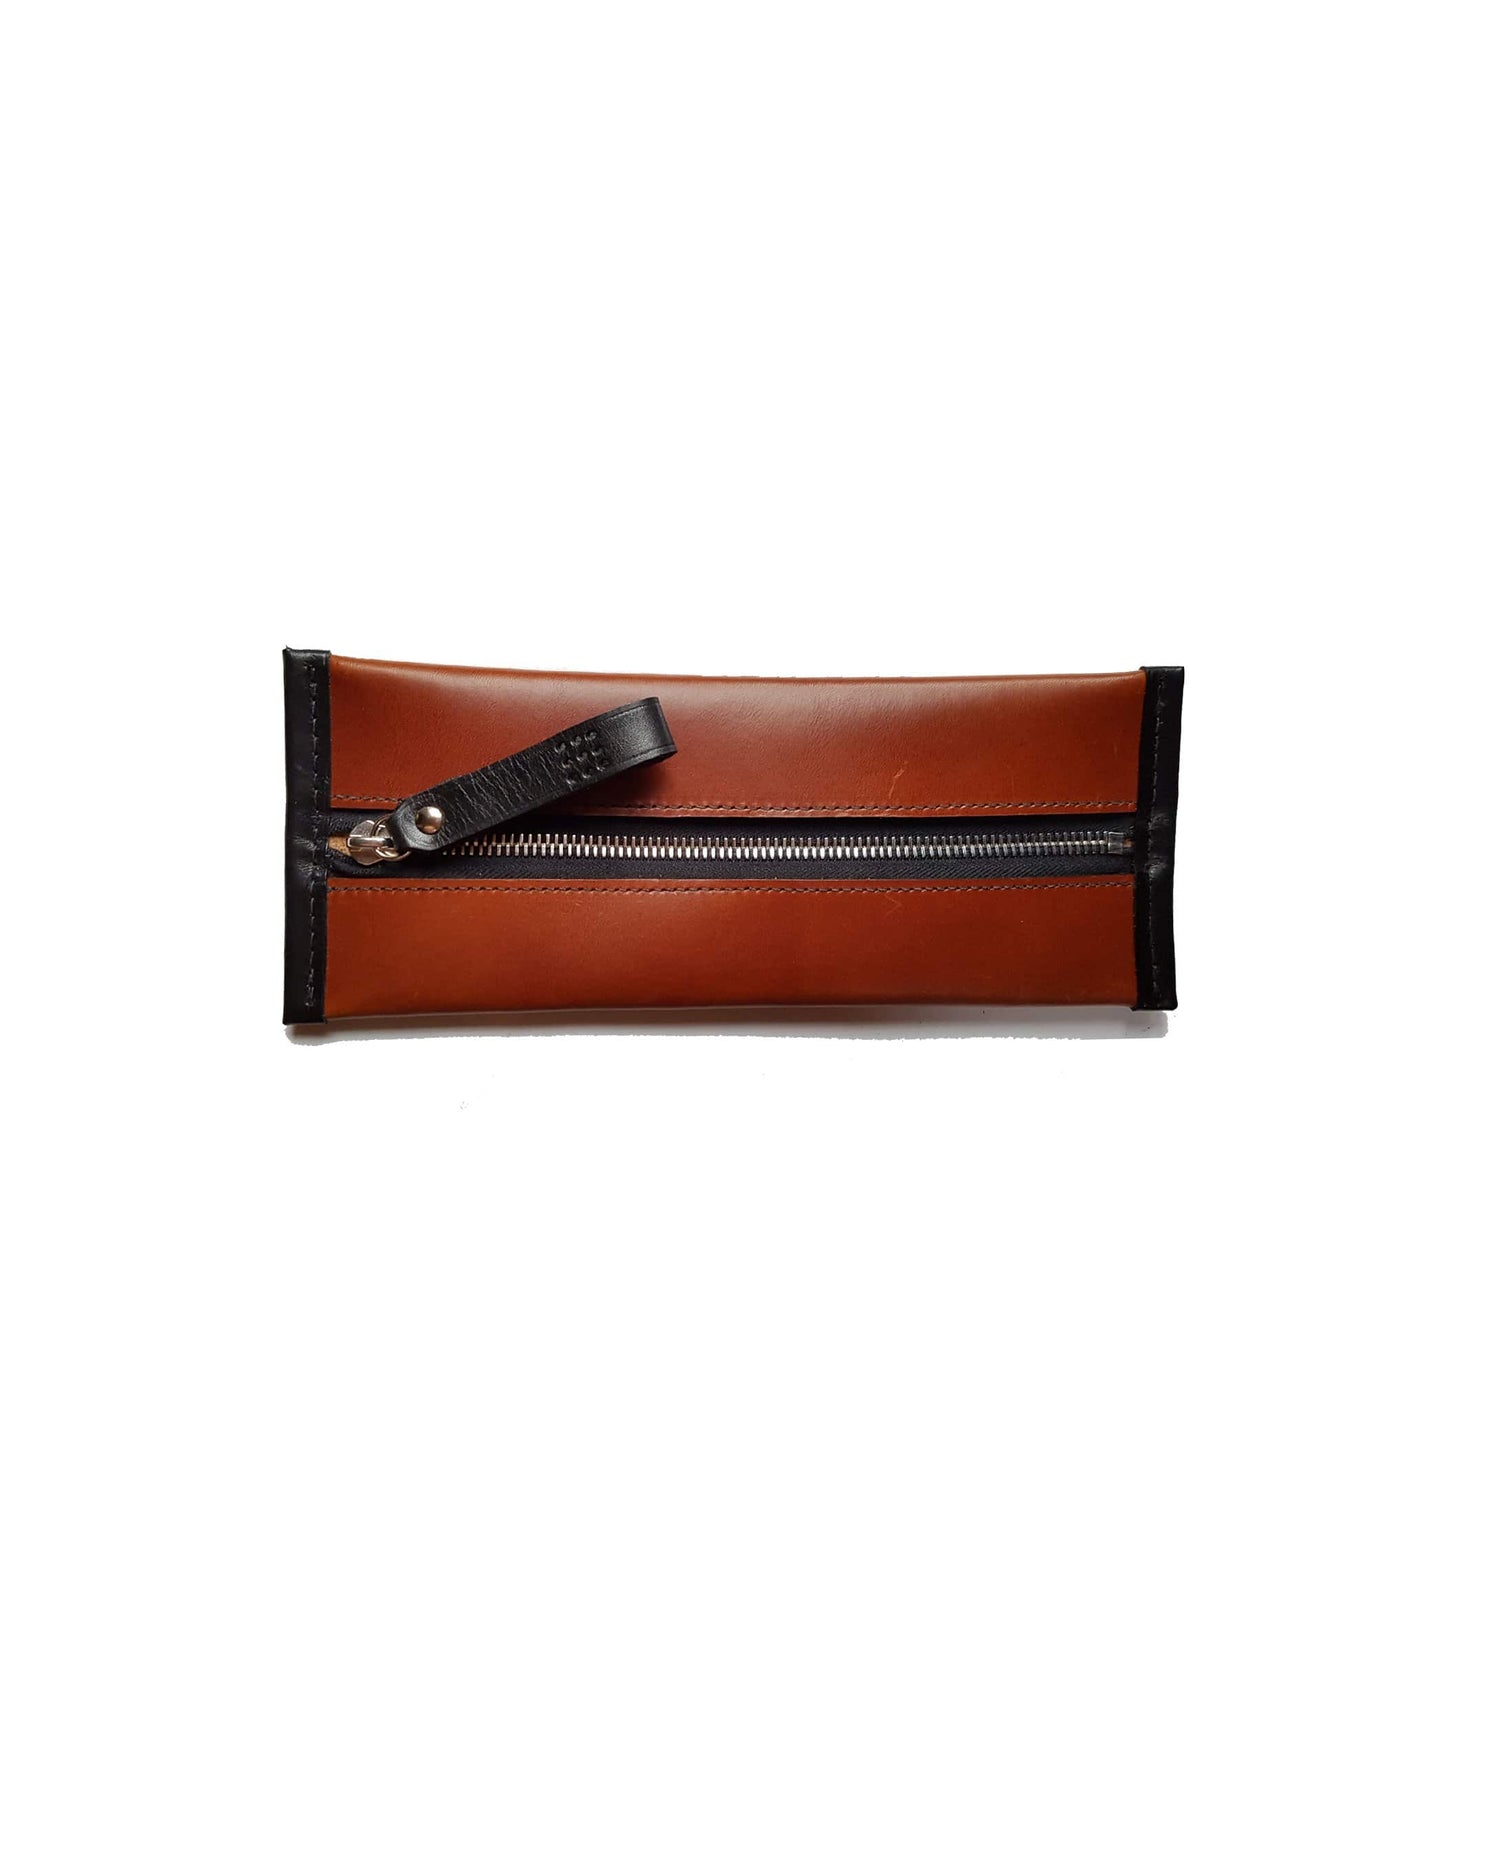 Hands of Tym stationery 'Cedar' Bespoke Handmade Leather Zipped Pencil Case